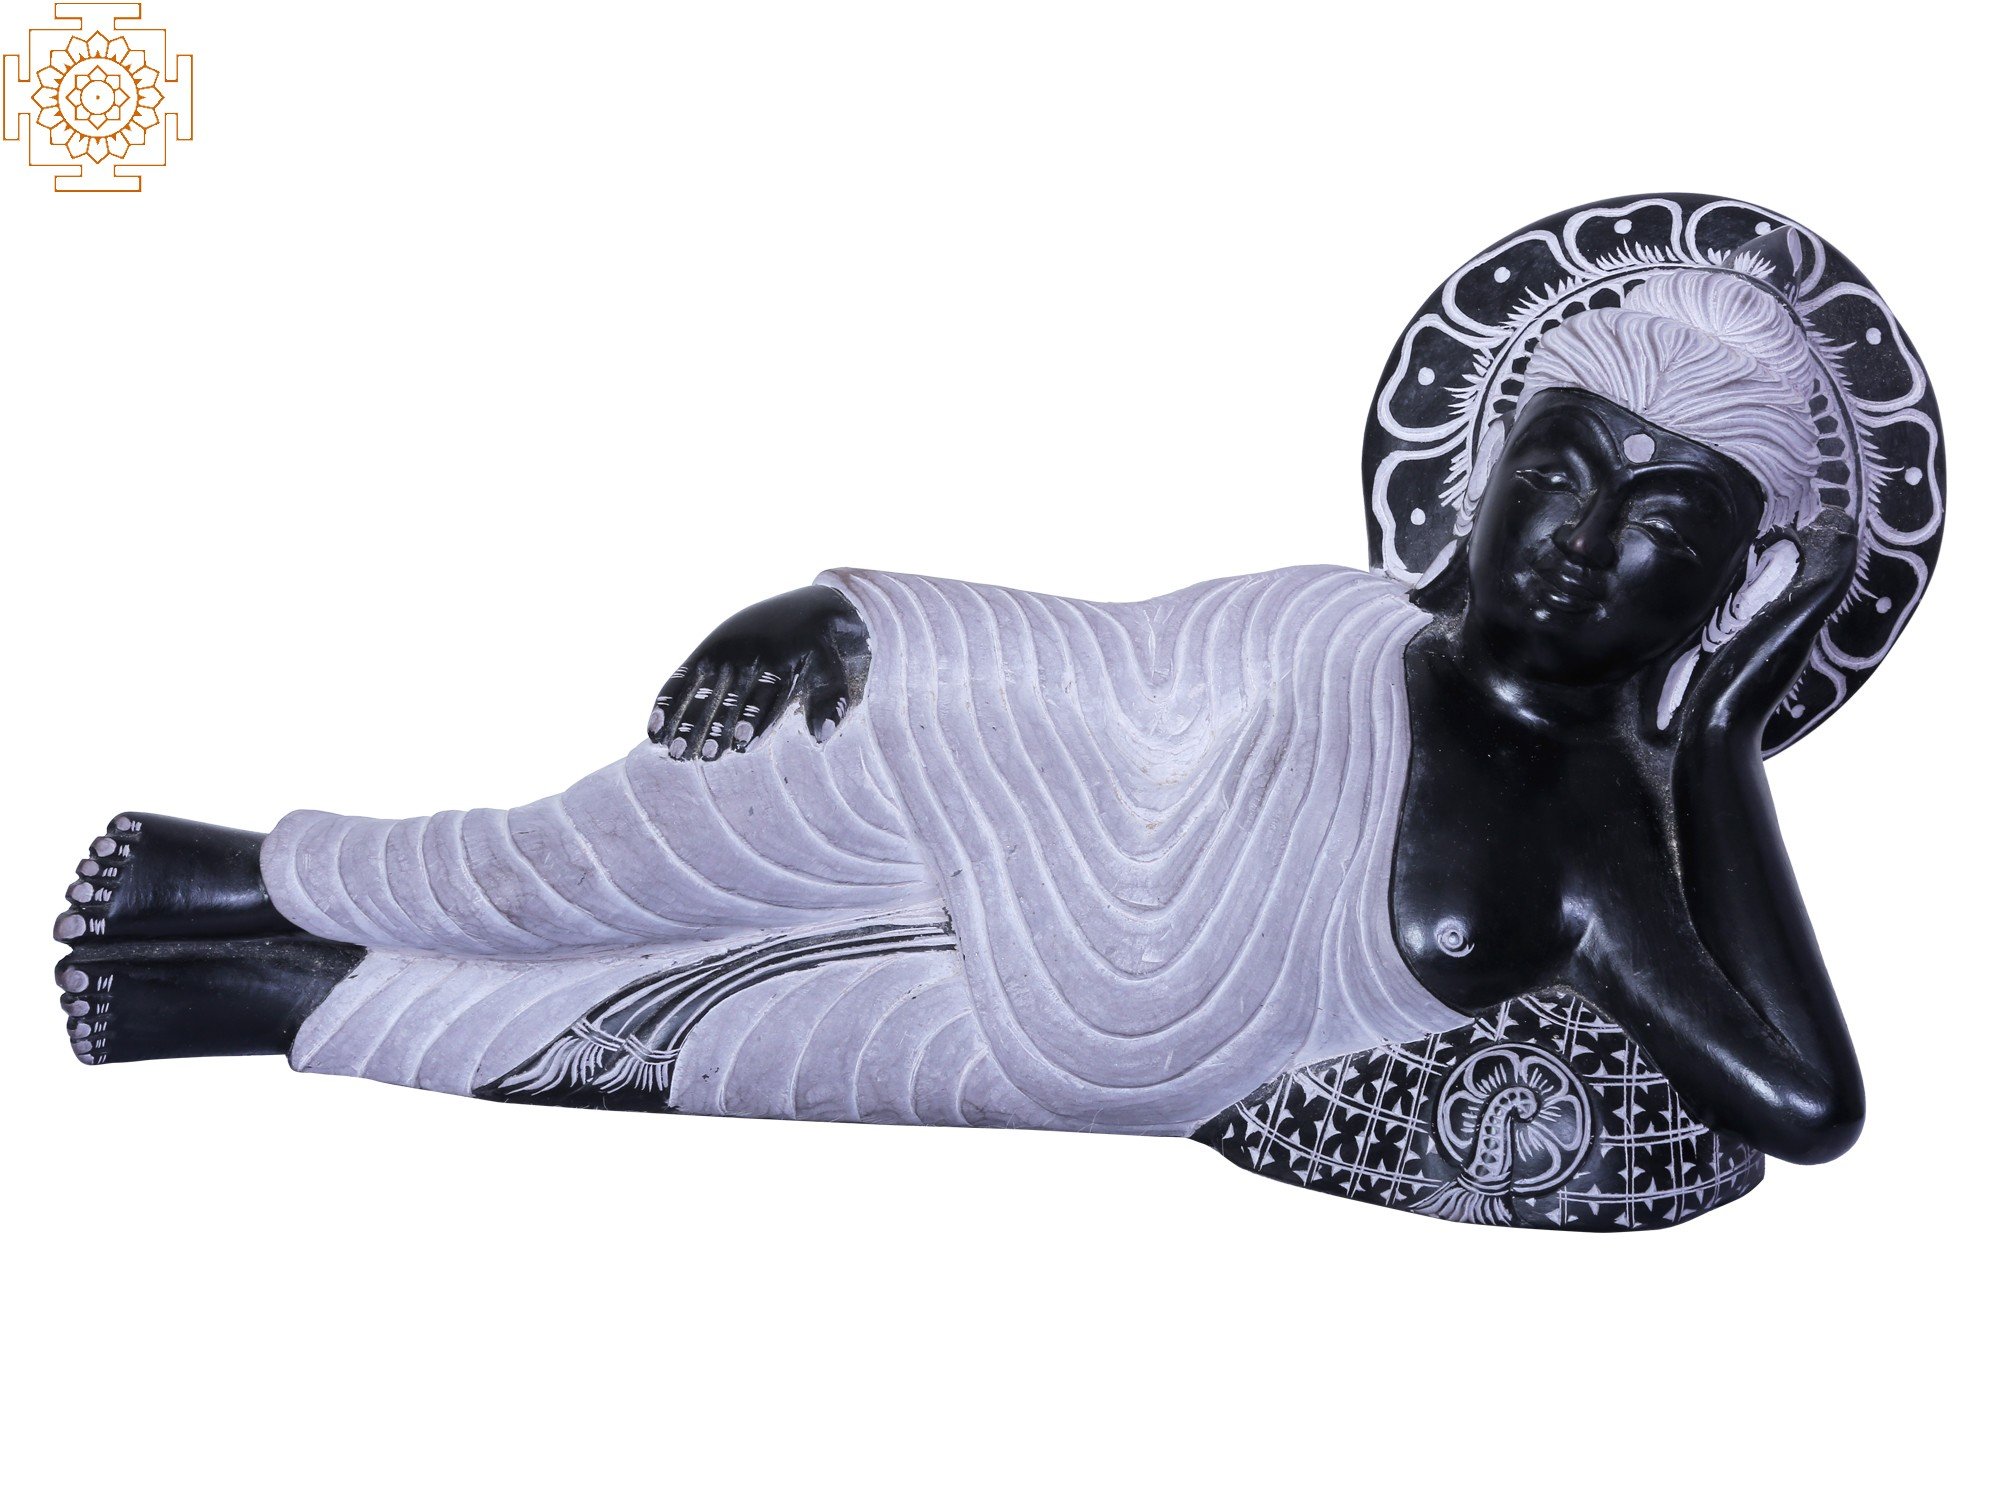 Sleeping Buddha Projects | Photos, videos, logos, illustrations and  branding on Behance